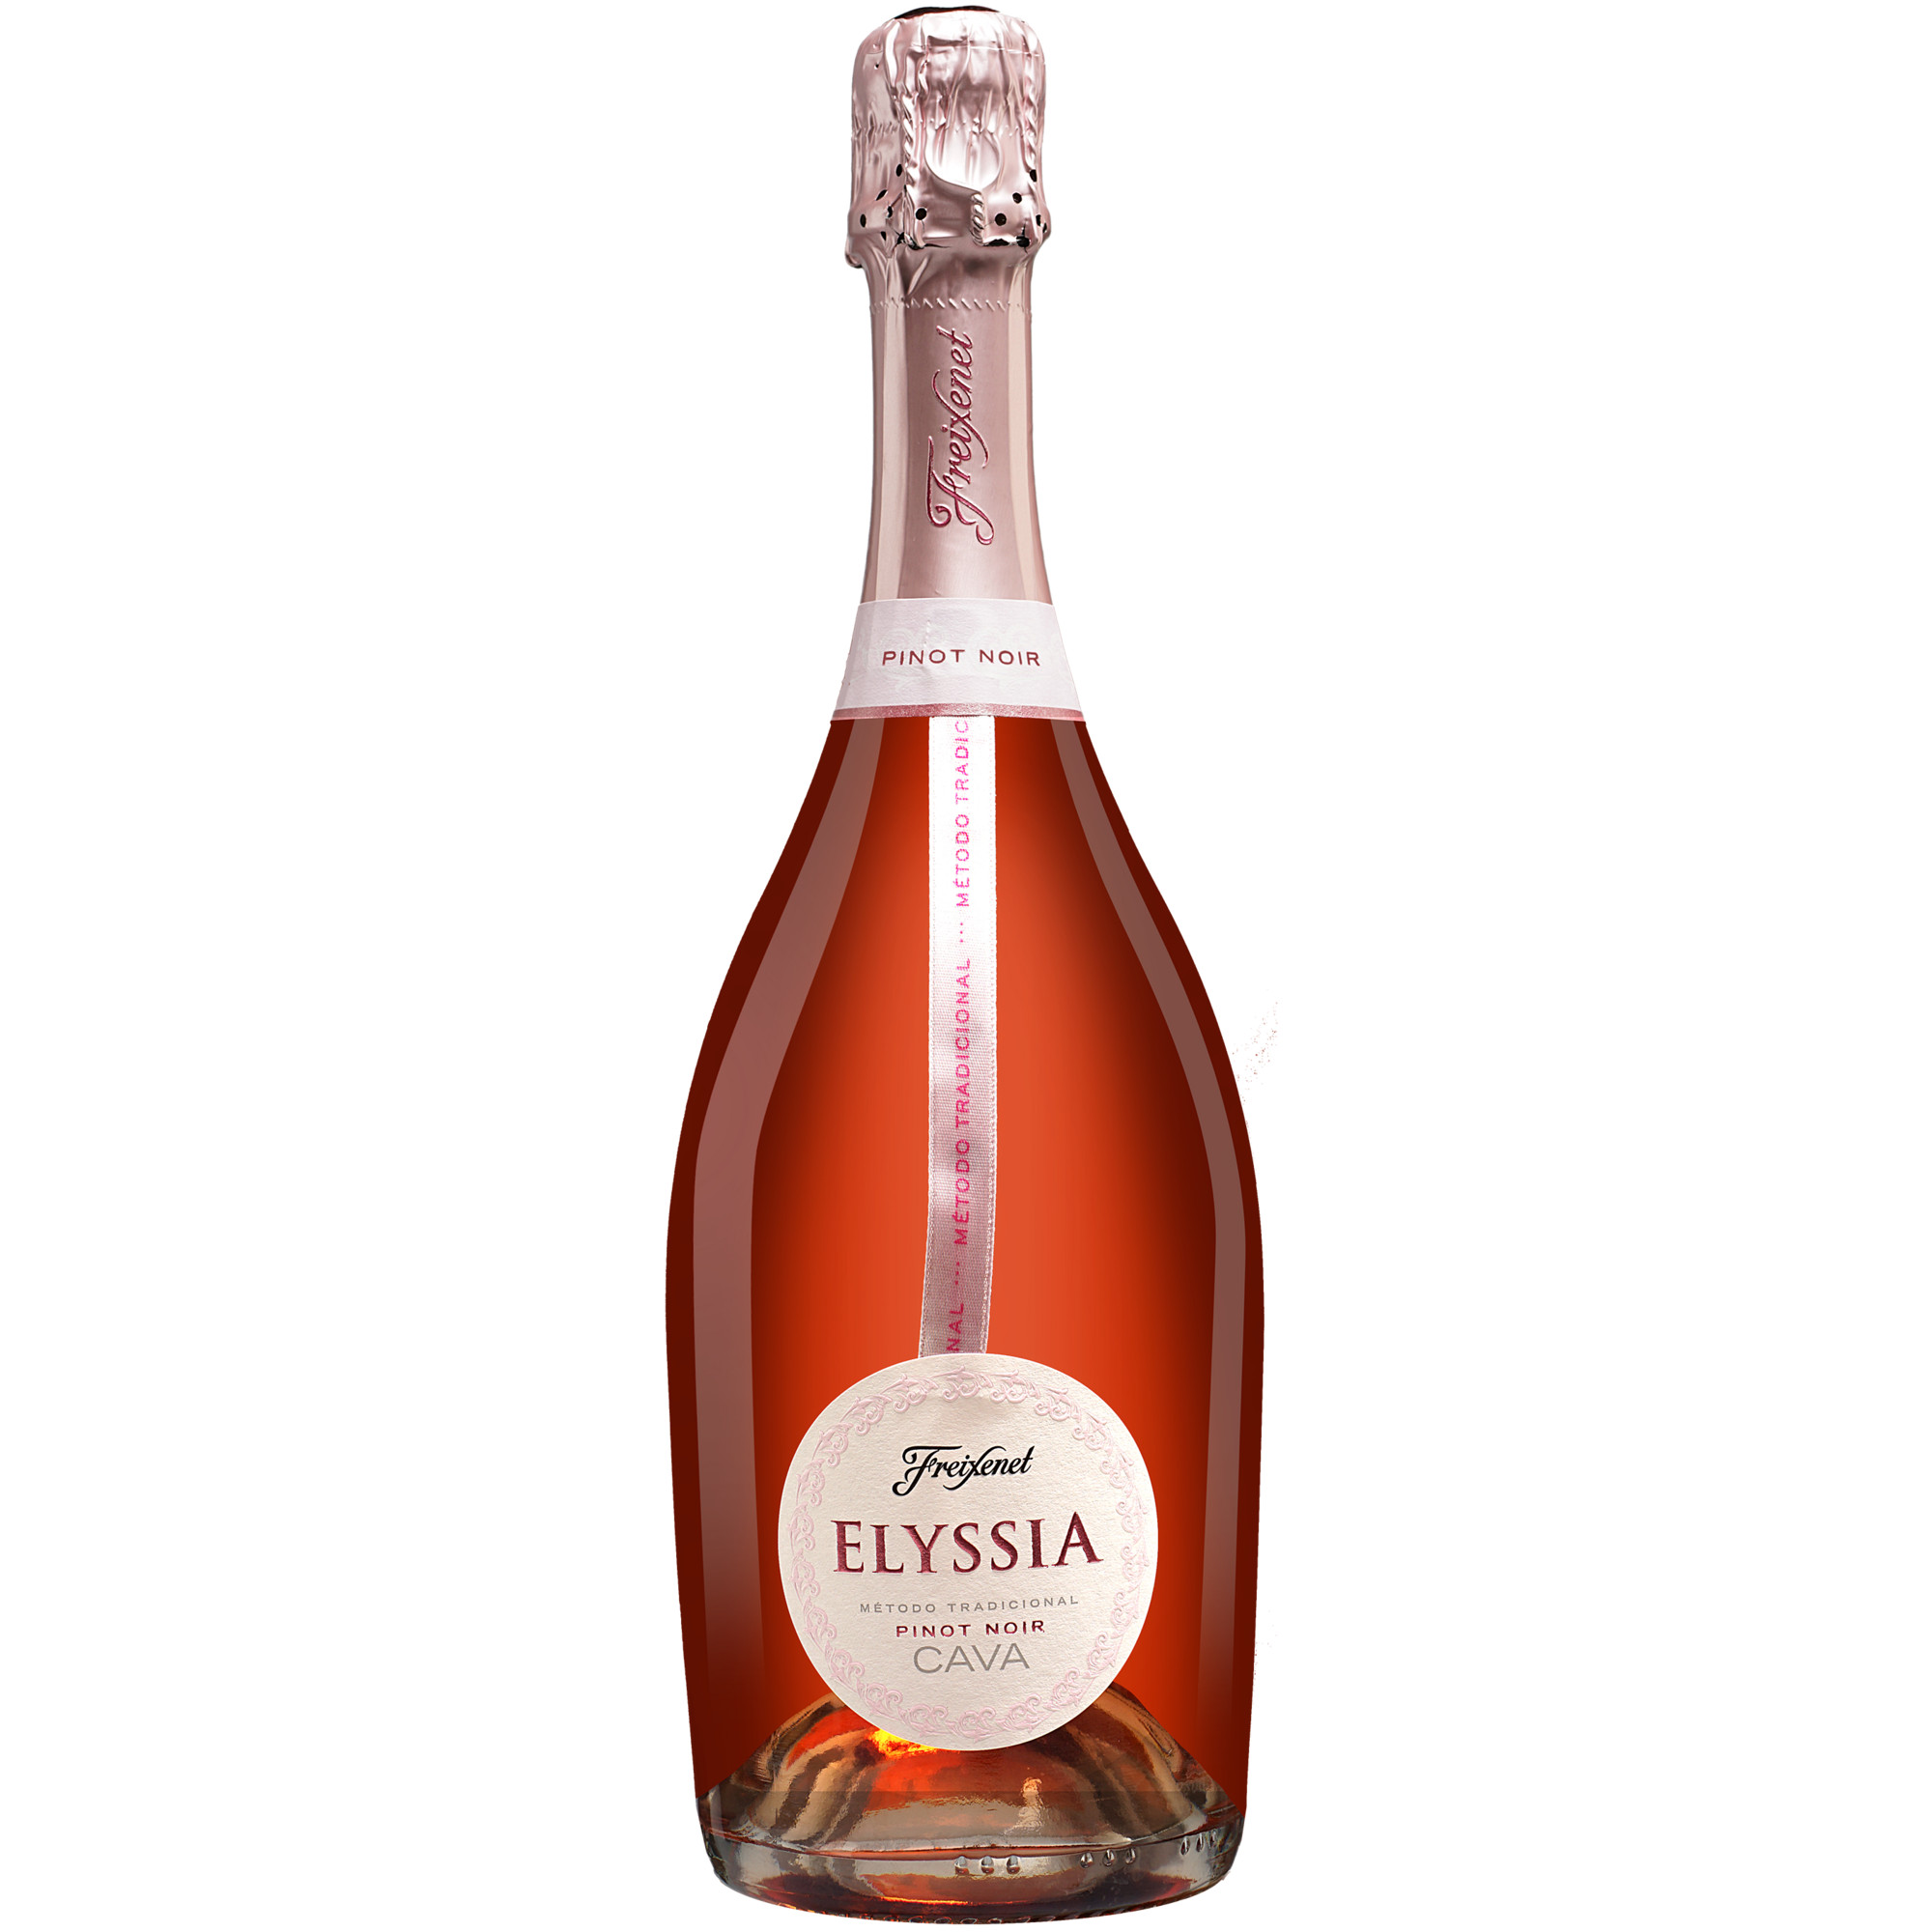 Freixenet Cava »Elyssia« Pinot Noir Brut  0.75L 12% Vol. Trocken aus Spanien